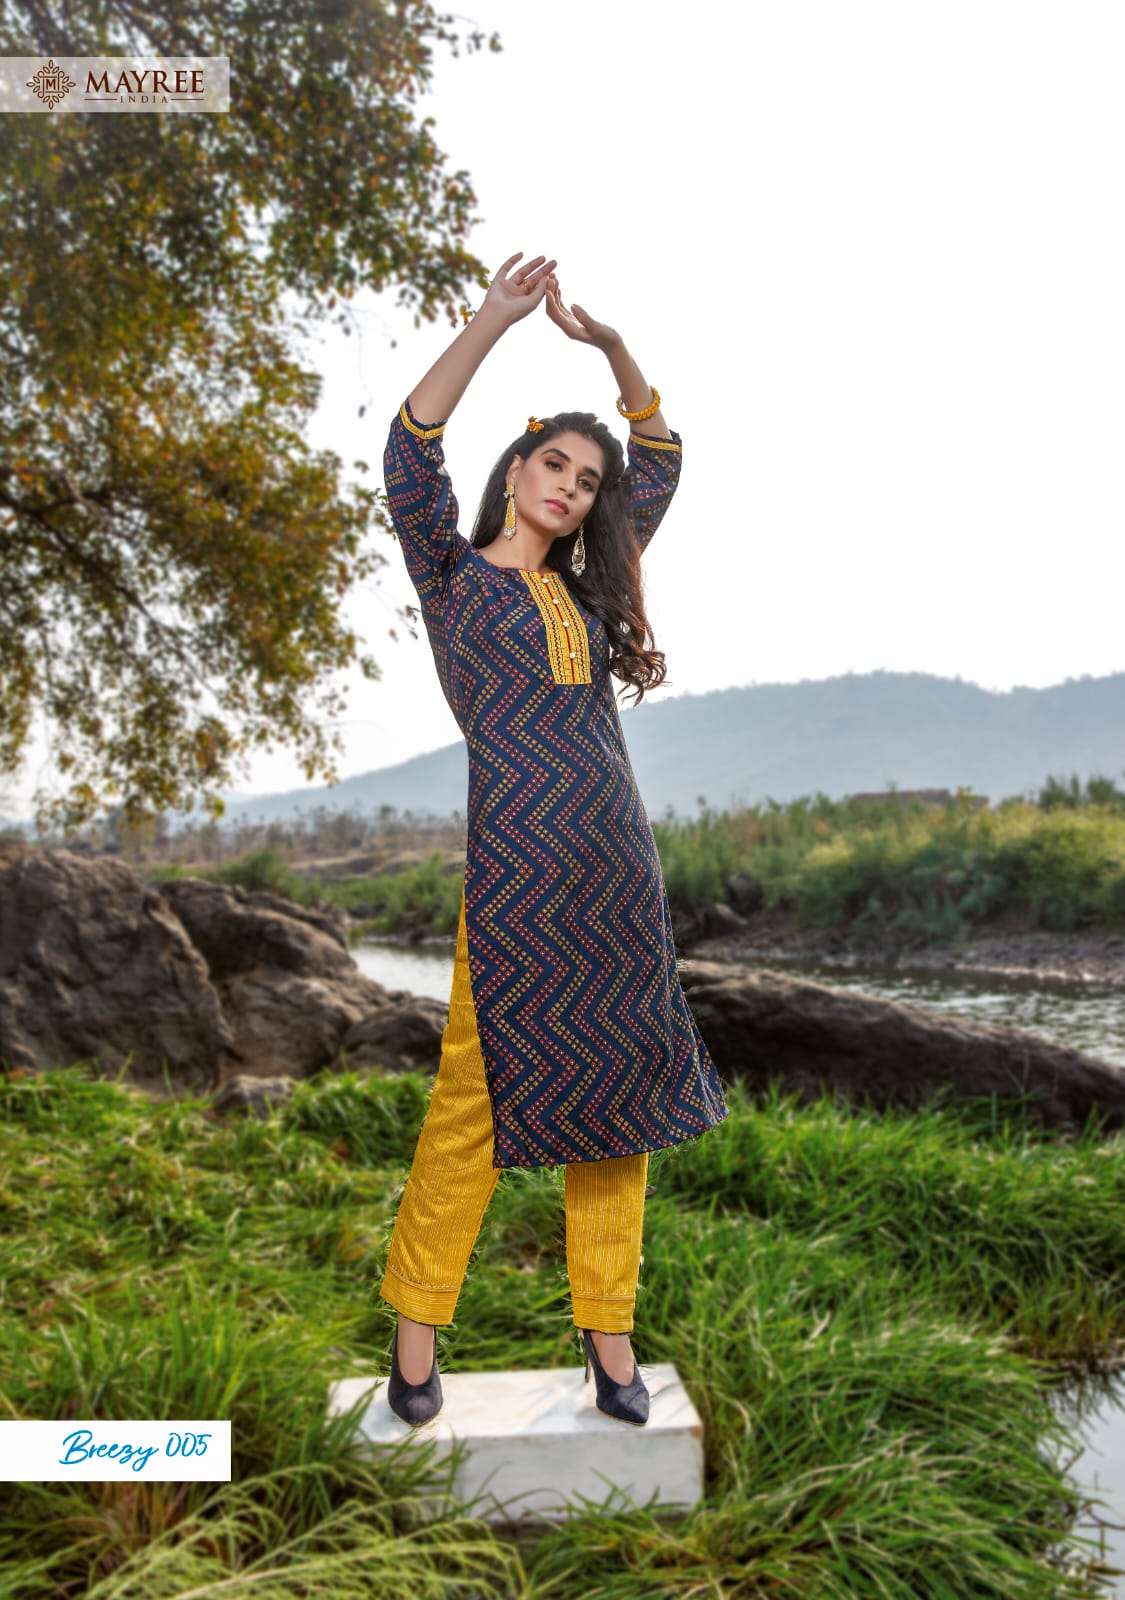 mayree india breezy rayon stylish kurtis catalogue wholesale price surat